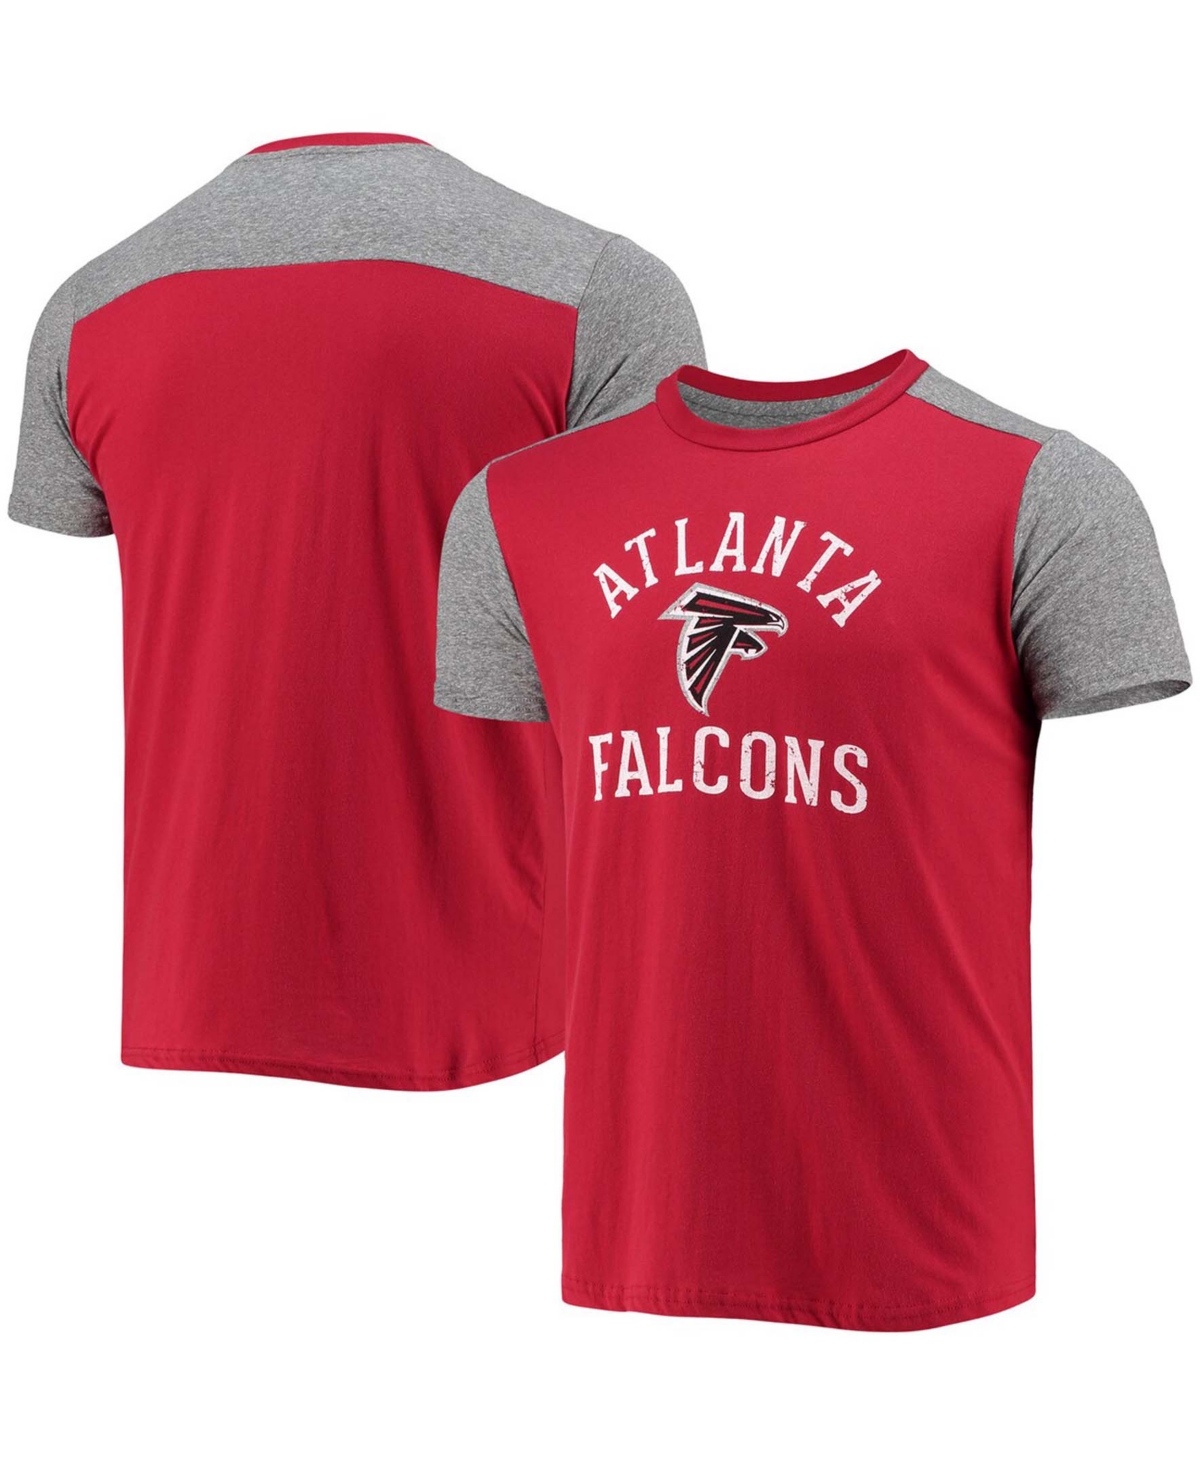 Men's Red, Gray Atlanta Falcons Field Goal Slub T-shirt - Red, Gray